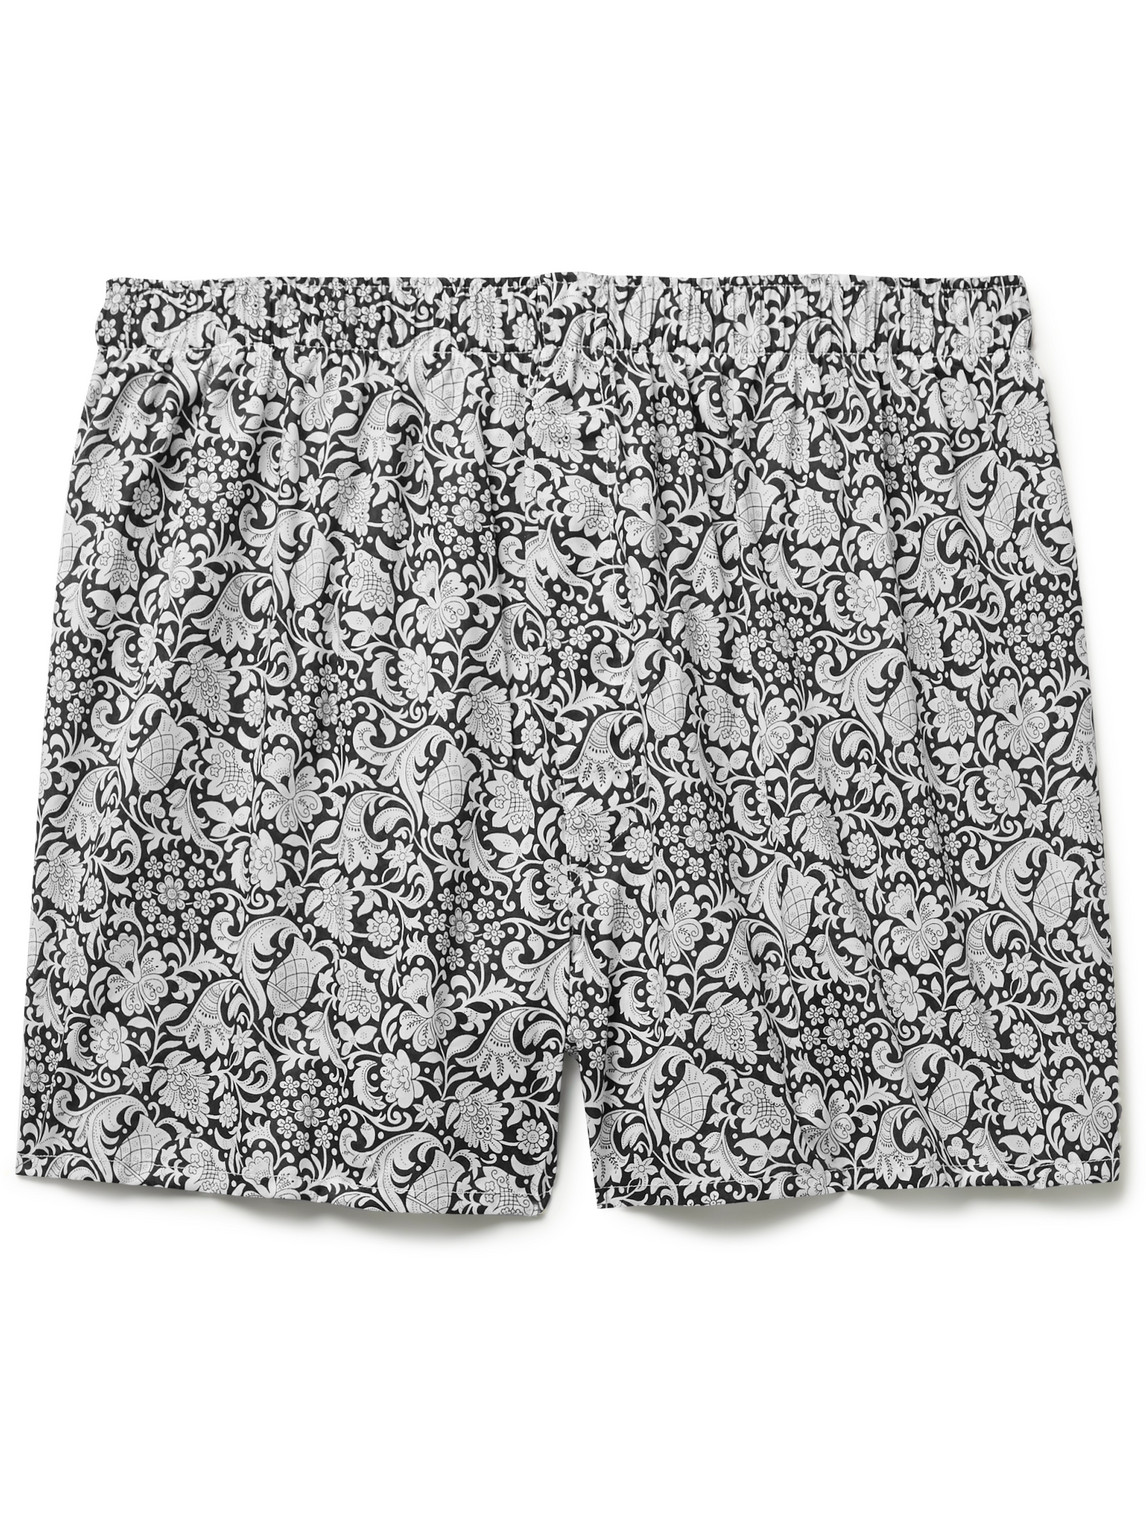 sunspel - printed cotton boxer shorts - men - gray - s